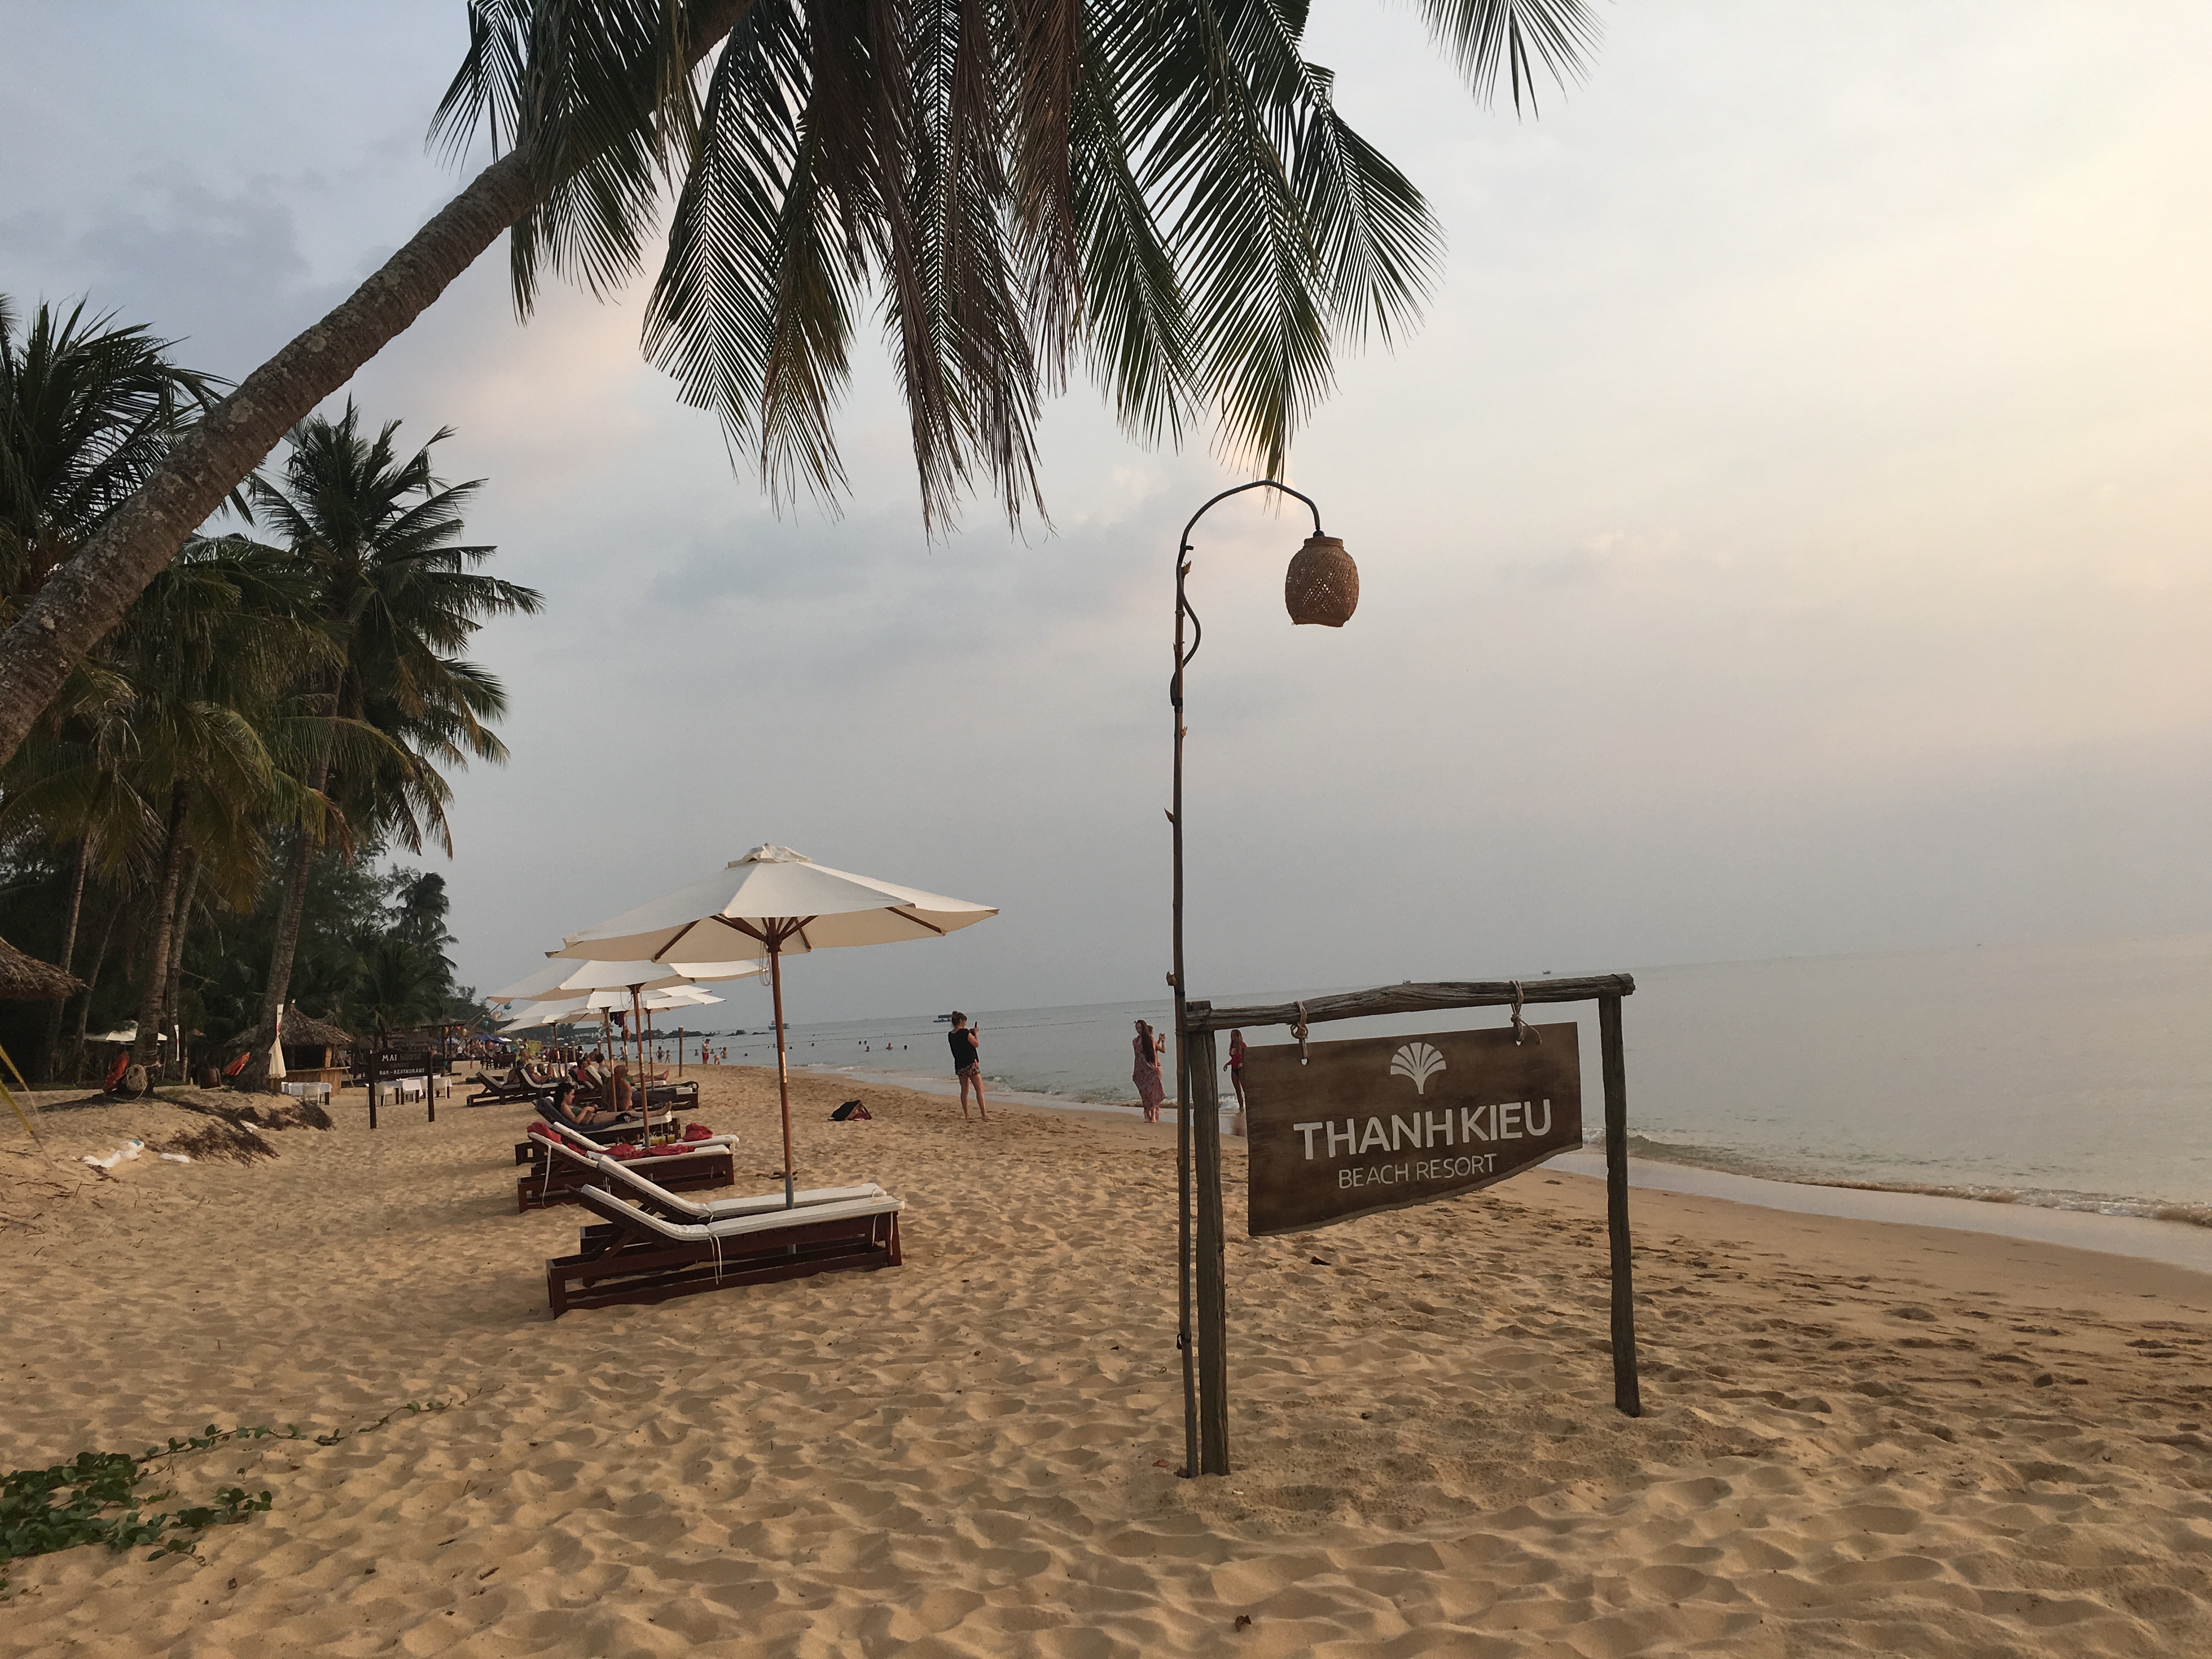 The beach at Thanh Kieu Beach Resort in Phu Quoc, Vietnam.